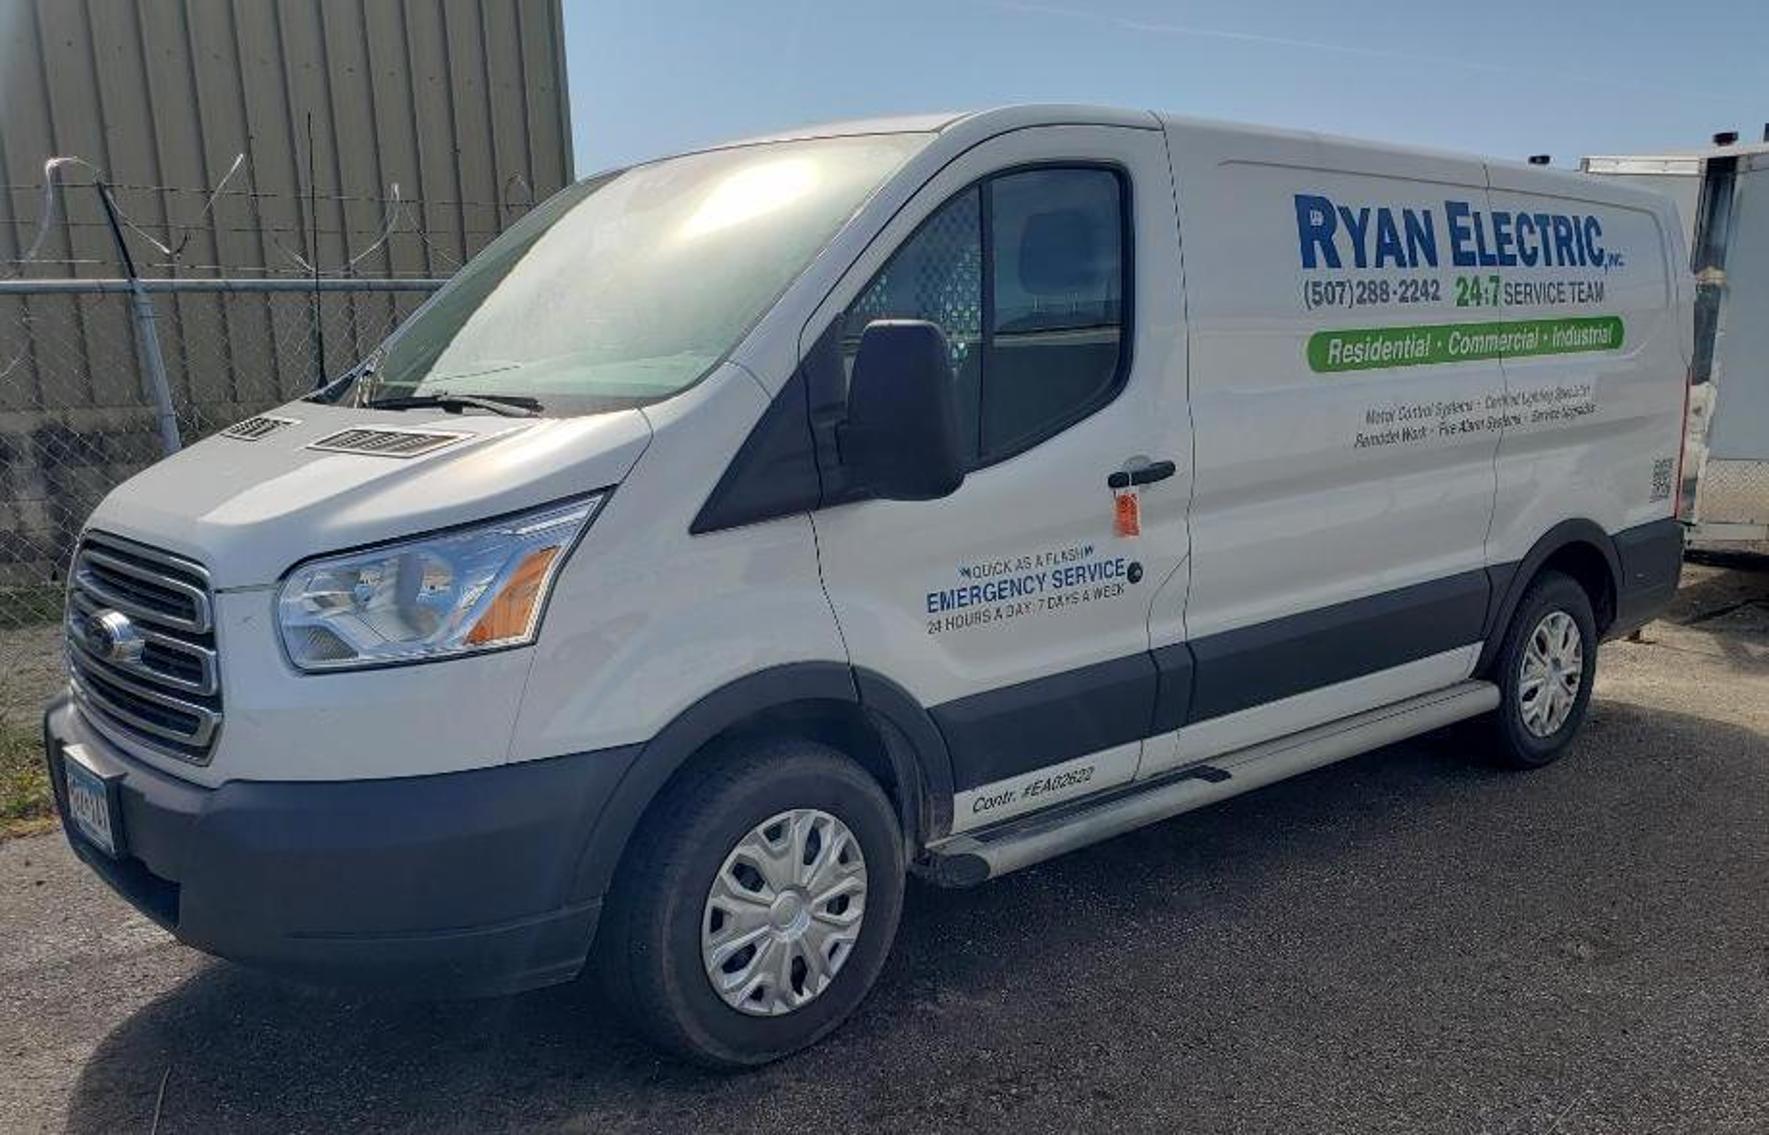 Ryan Electric Inc. Complete Liquidation, Phase 1